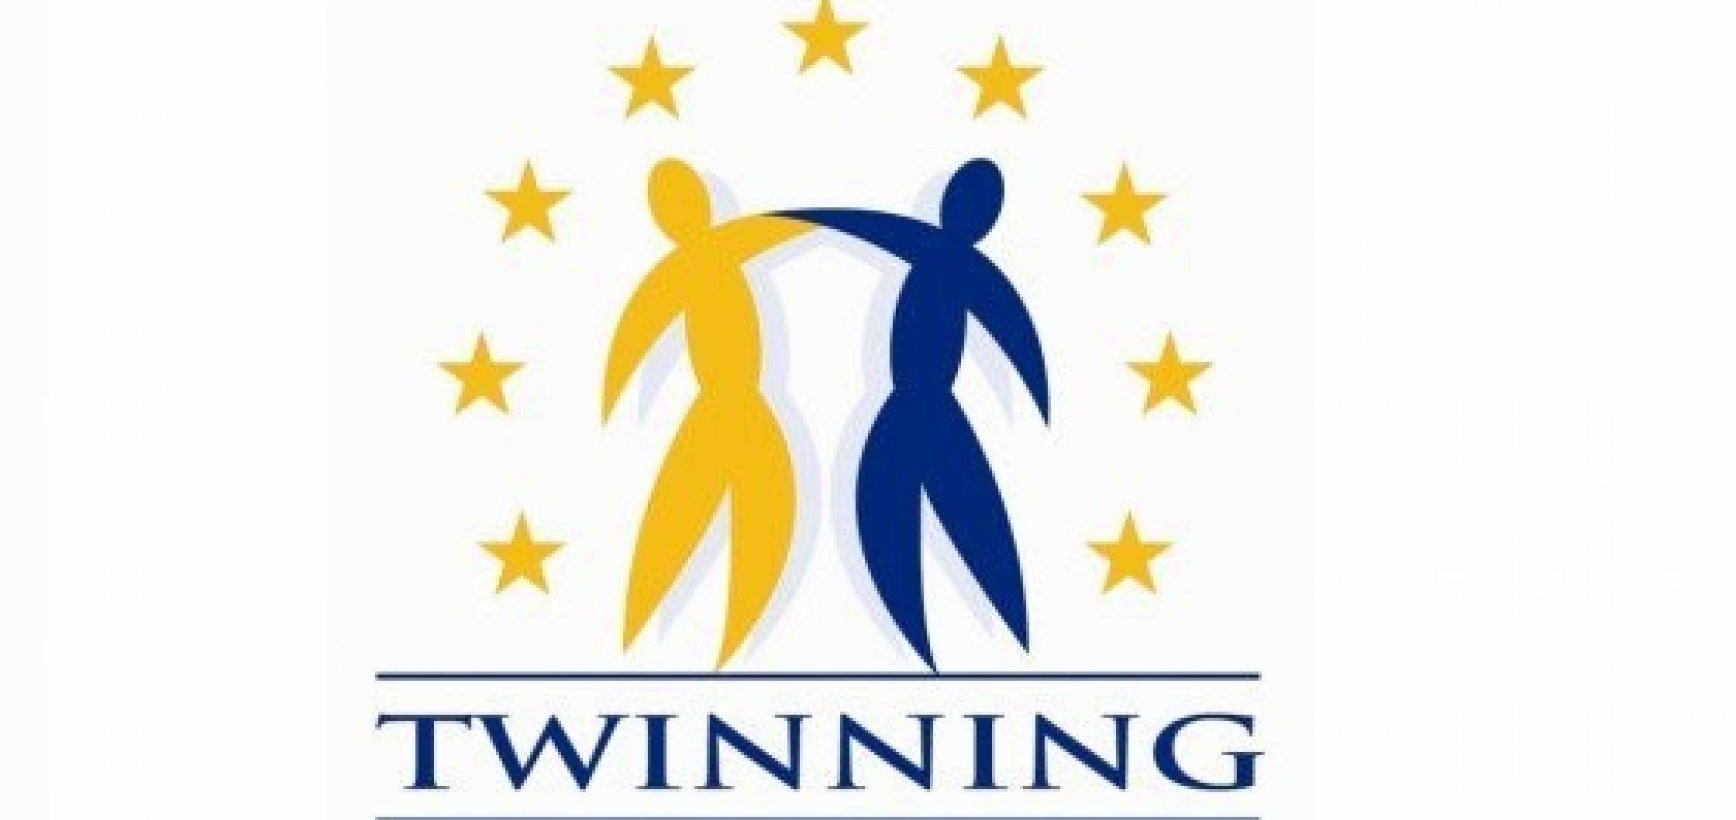 EU Twinning project in Serbia